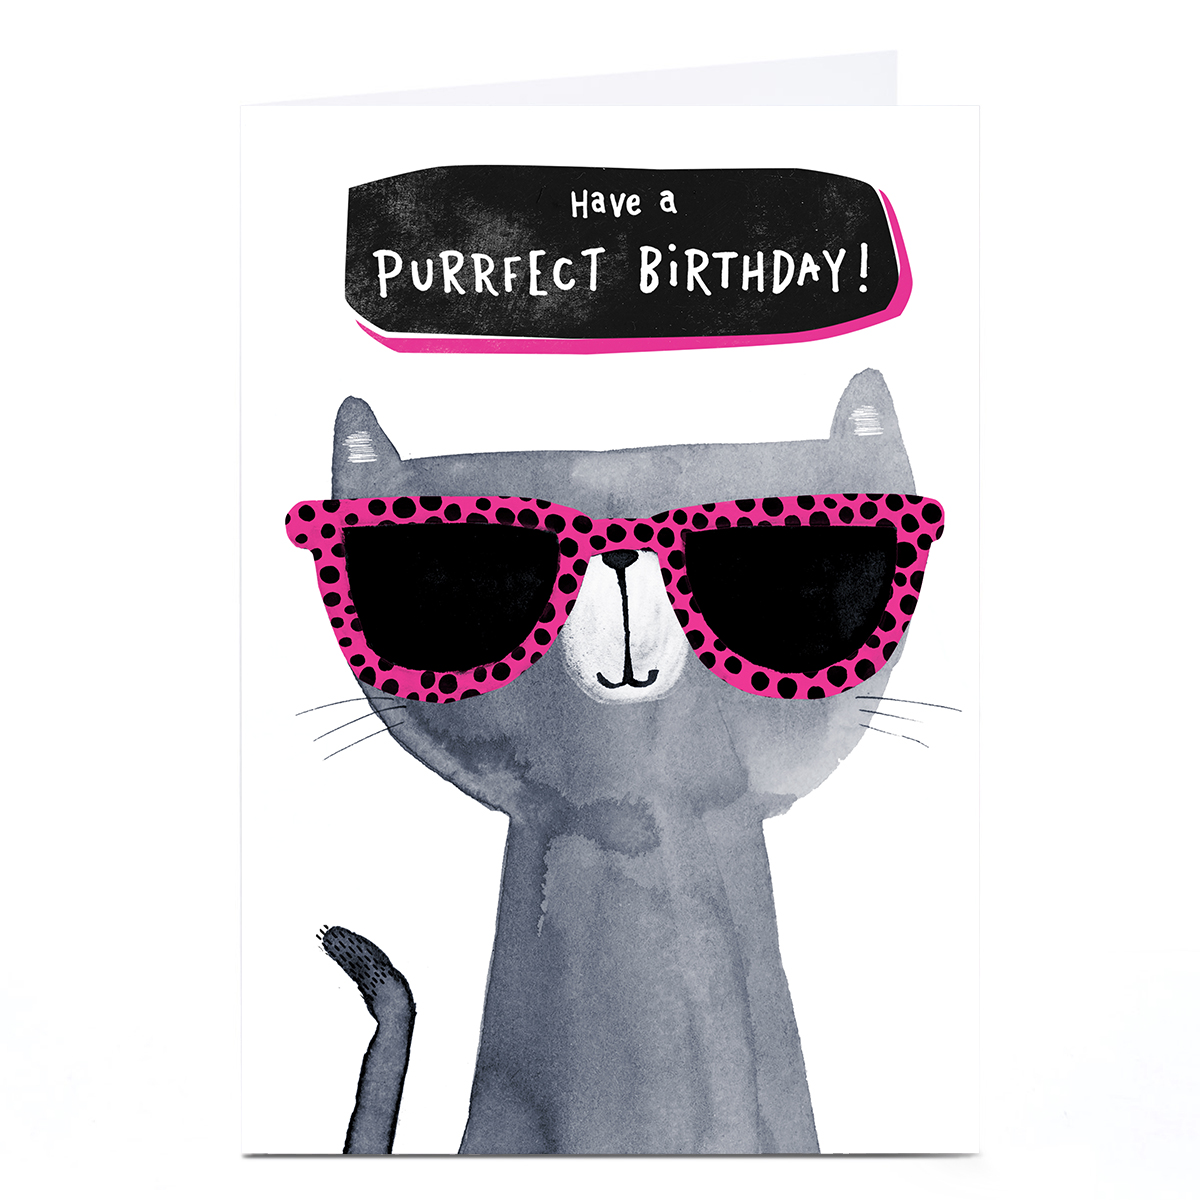 Personalised Andrew Thornton Birthday Card - Purrfect Birthday!